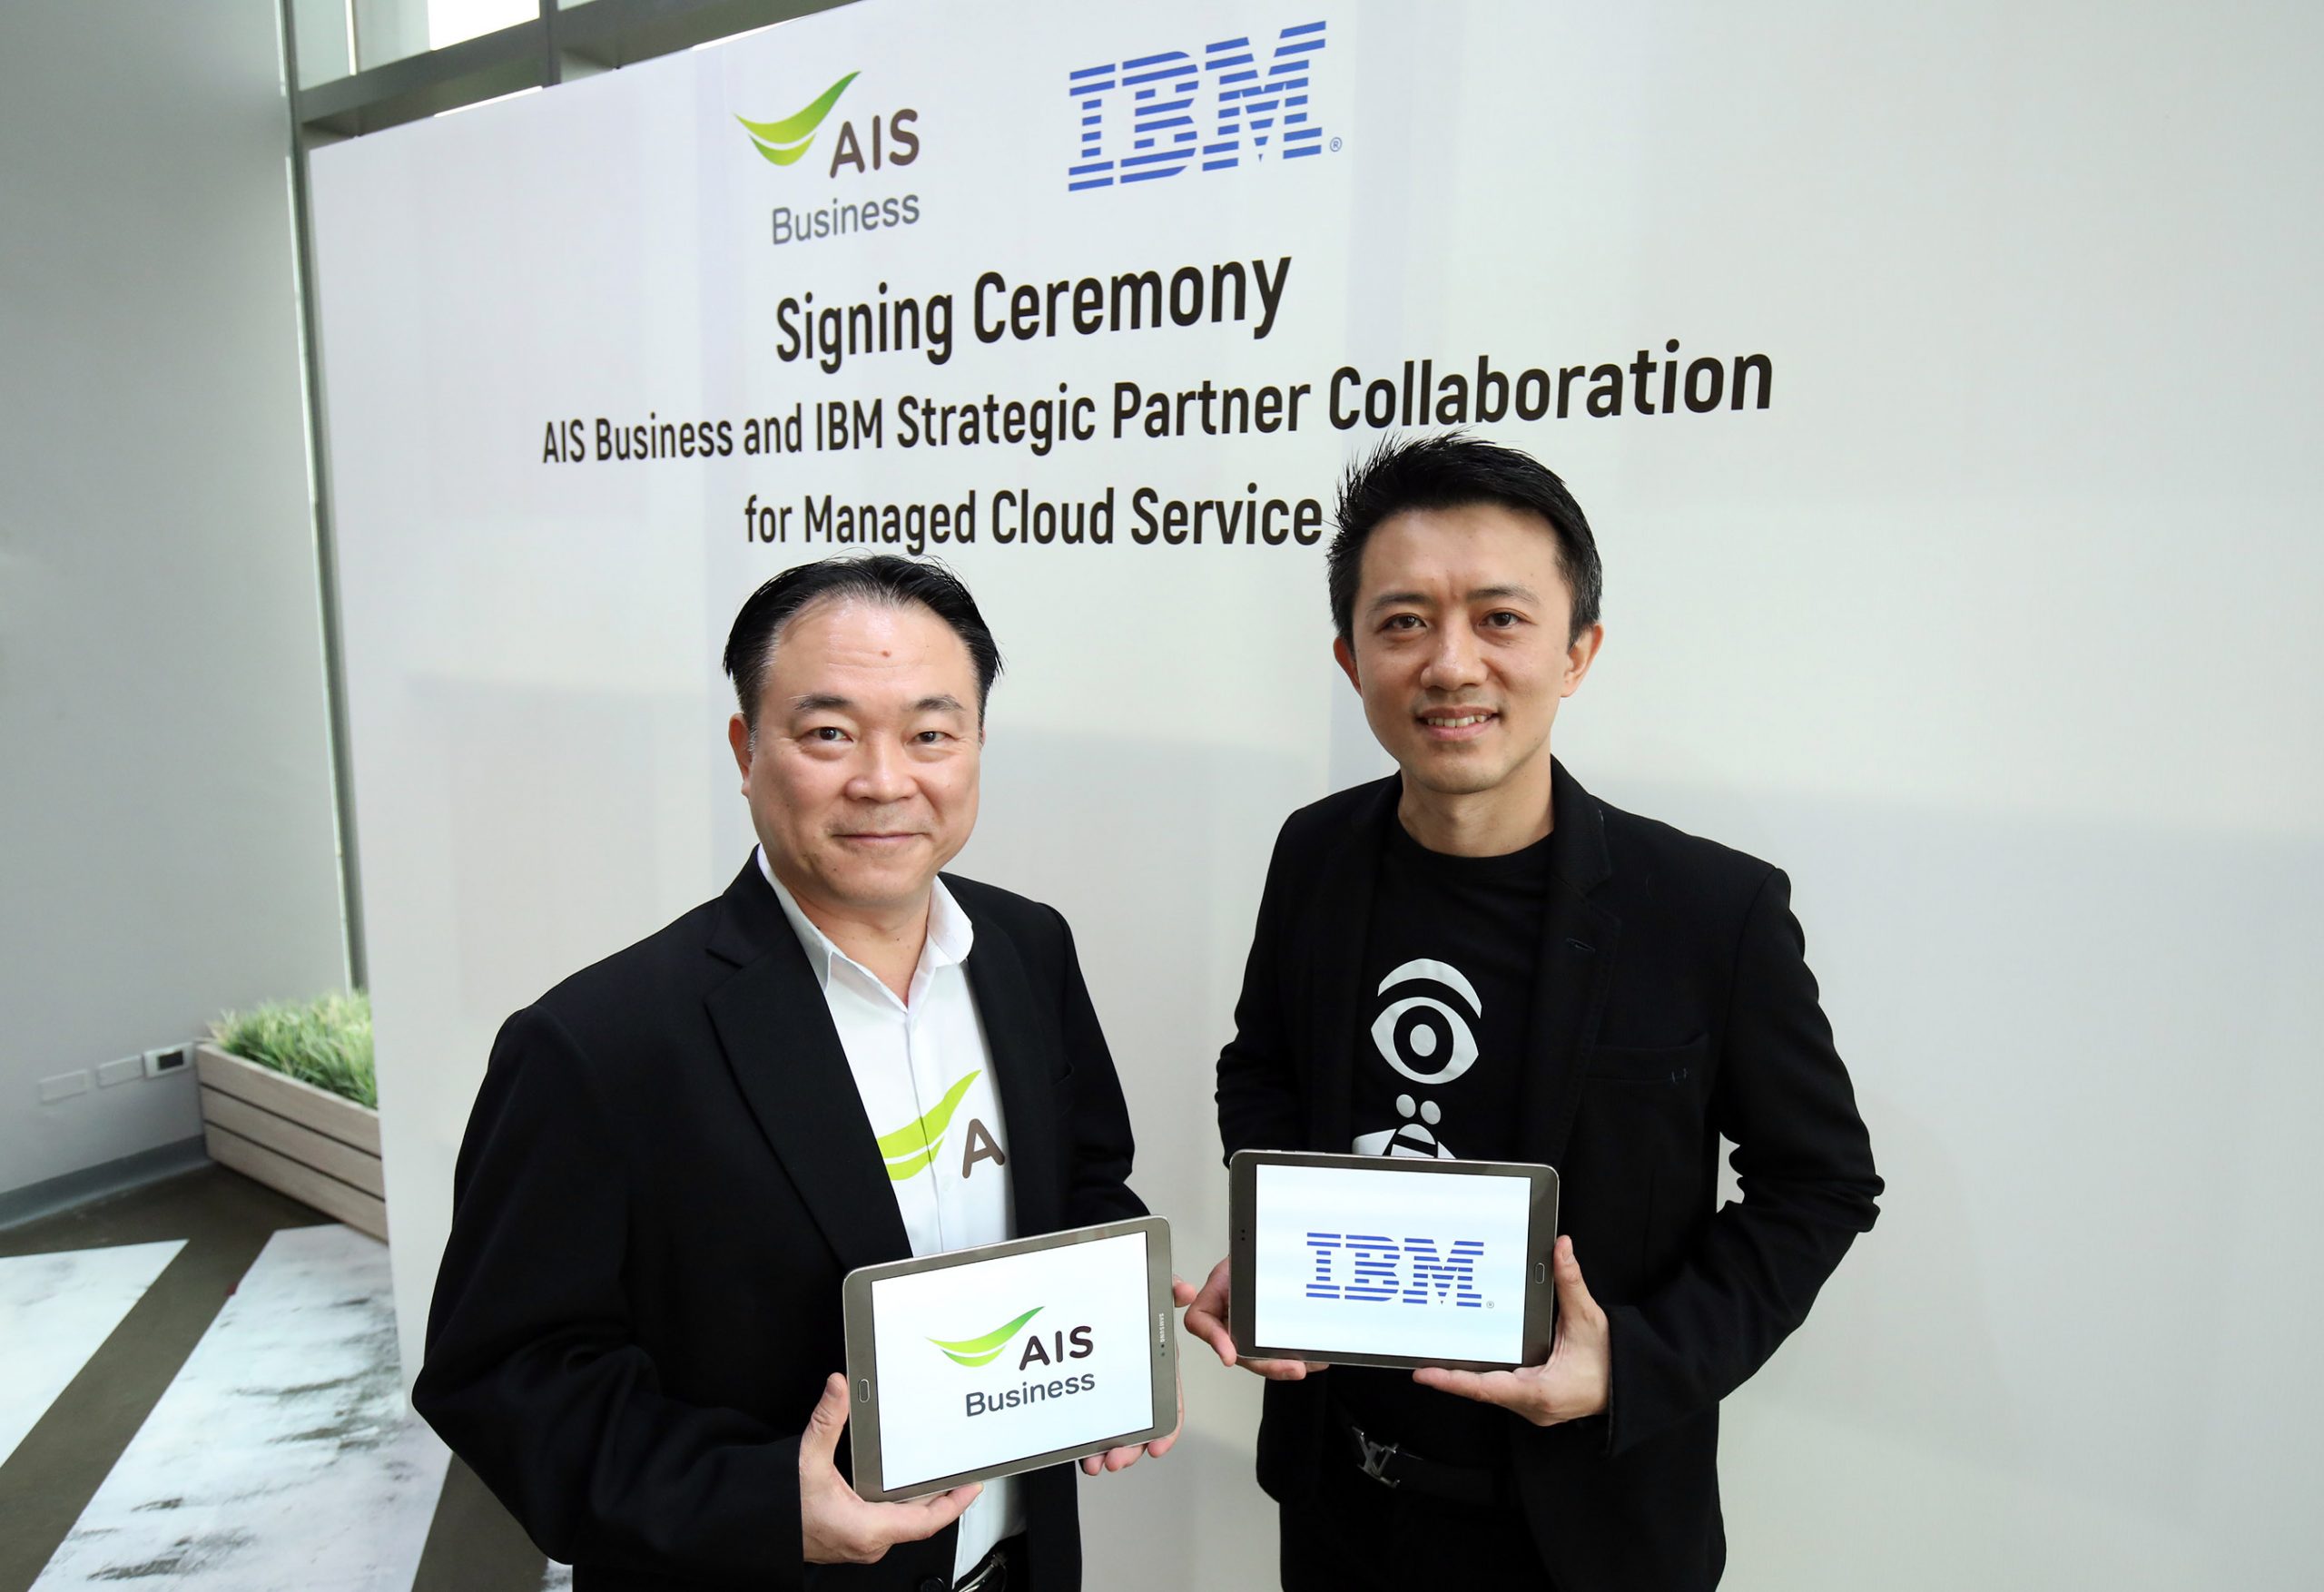 AIS Business ผนึกพันธมิตรระดับโลก IBM ส่งบริการ Cloud Managed Services ช่วยองค์กรไทยเดินหน้าต่อเนื่องไม่มีสะดุด แม้ในช่วงสถานการณ์